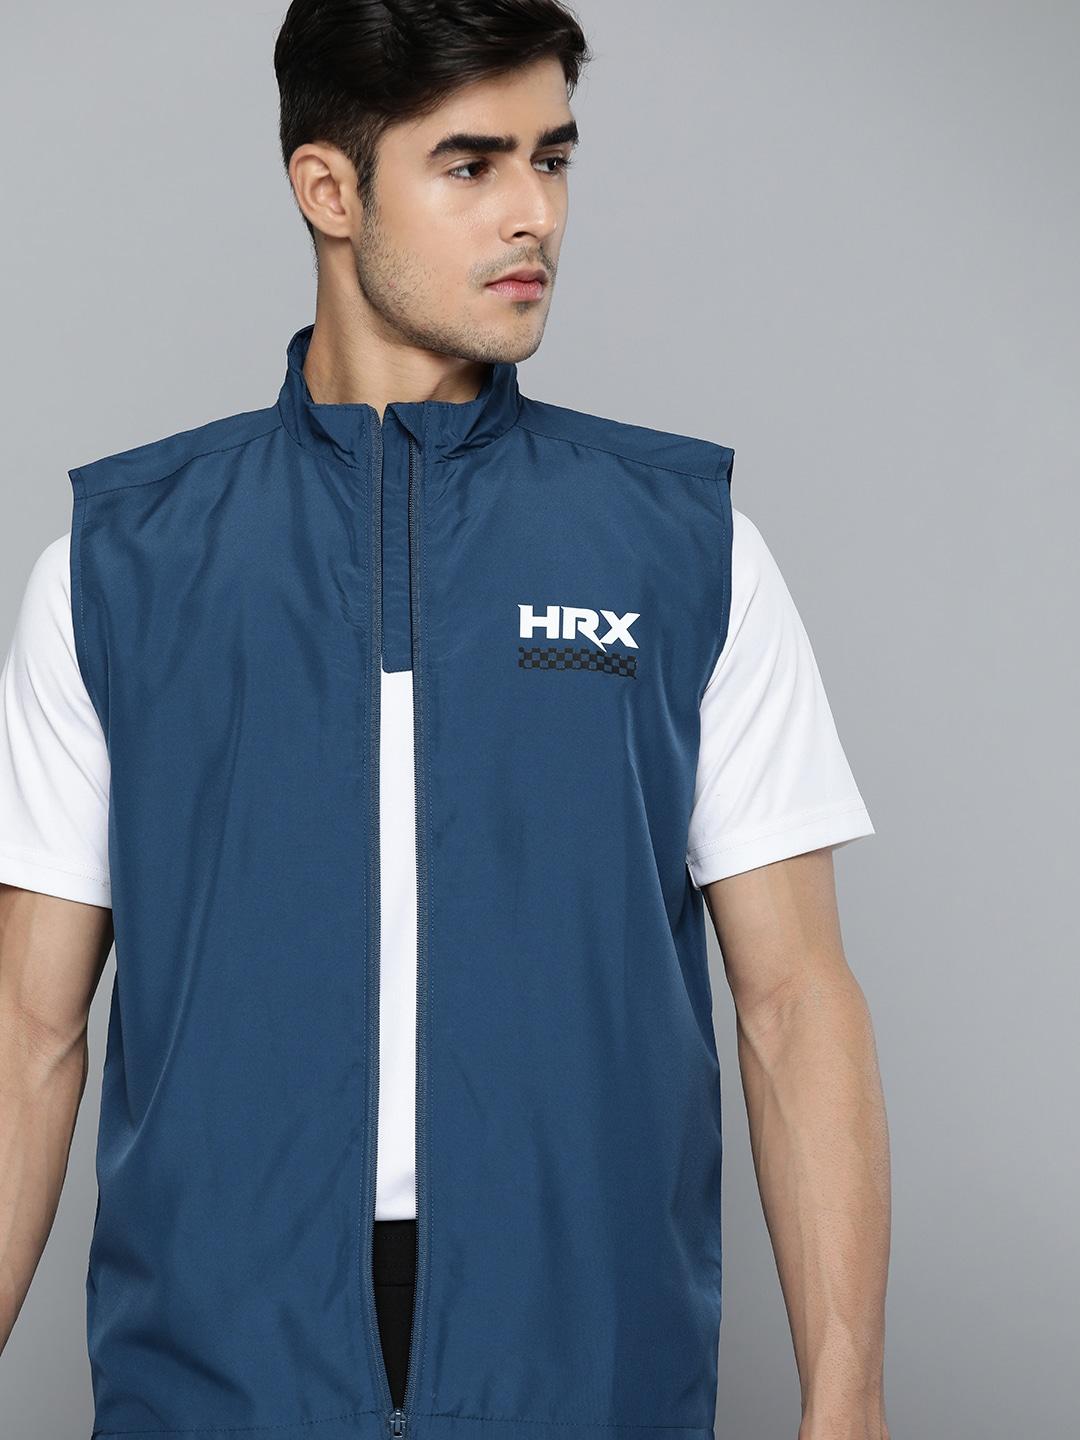 hrx by hrithik roshan men teal blue brand logo printed rapid-dry tailored jacket